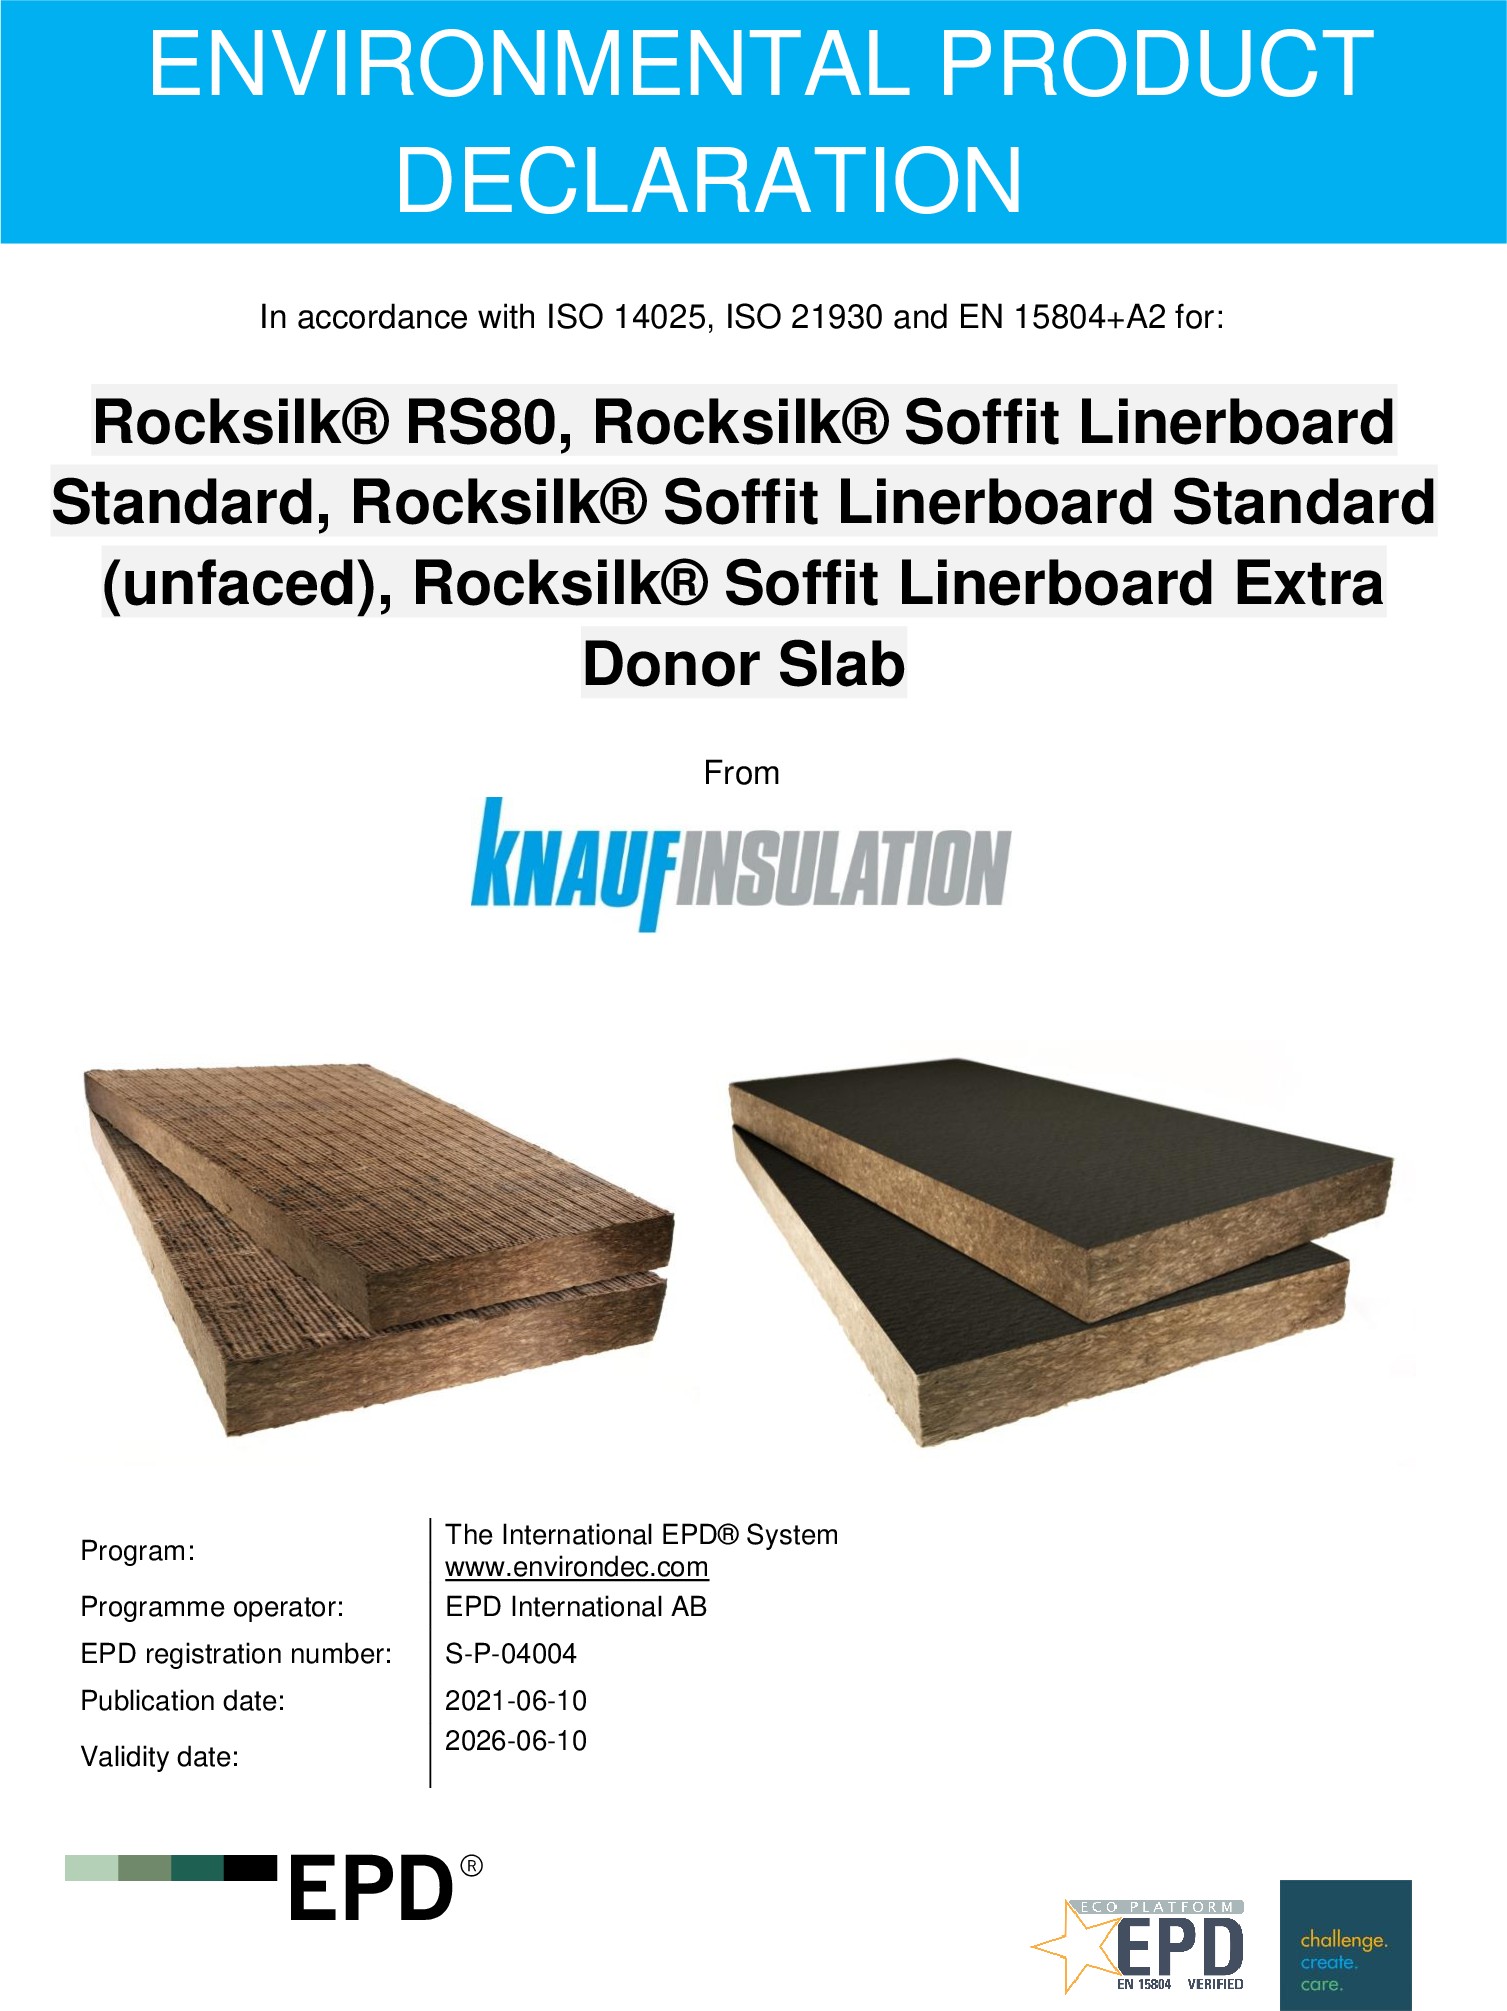 Rocksilk RS80, Rocksilk Soffit Linerboard Standard,Rocksilk Soffit Linerboard Standard Unfaced